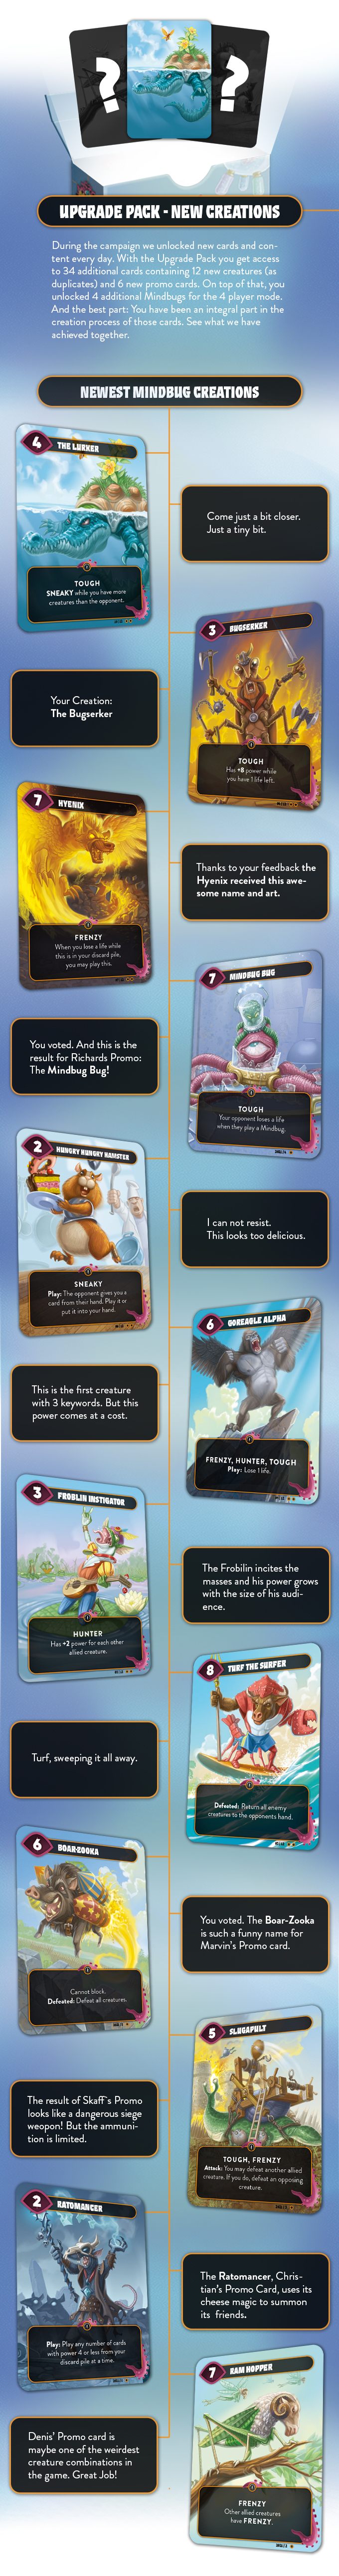 Mindbug Pioneer - Kartenspiel - Nerdlab Games 